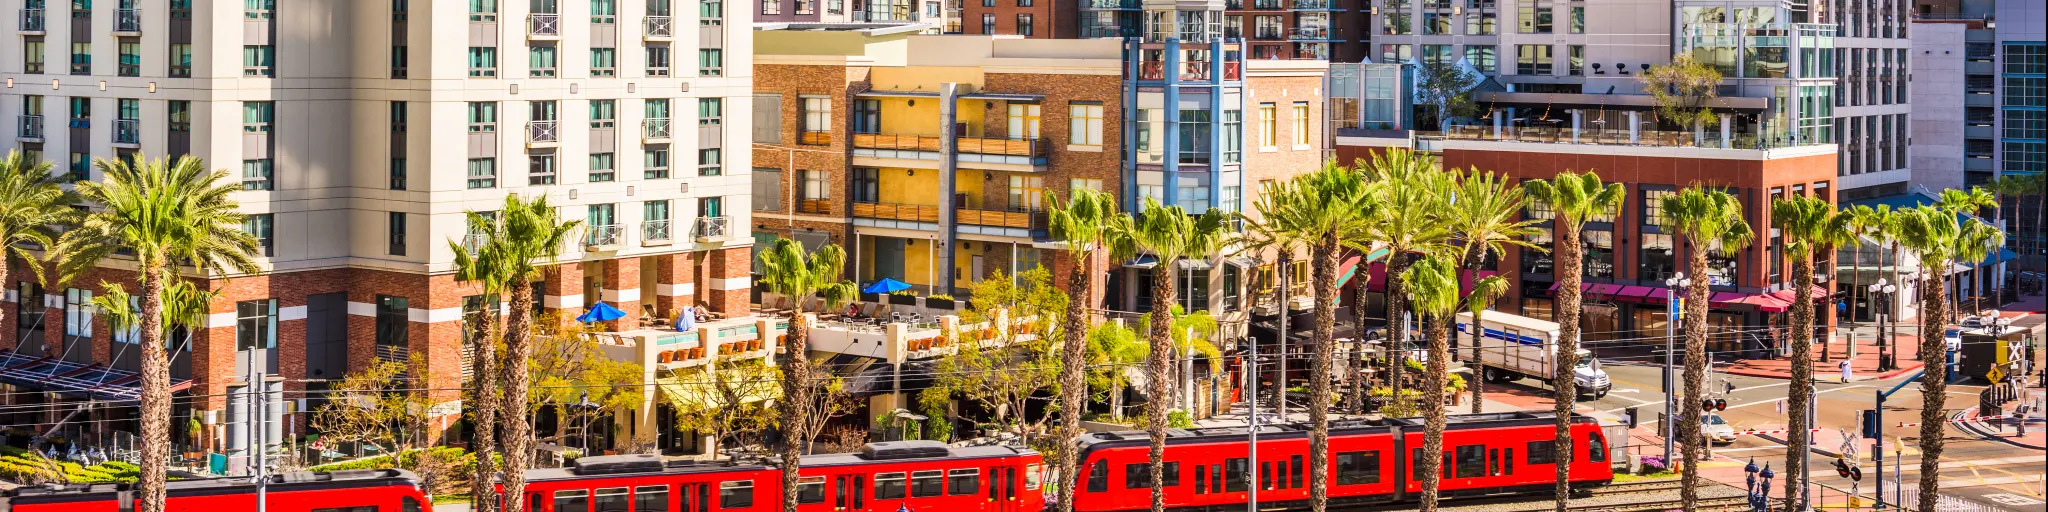 A classic red trolley in San Diego's Gaslamp neighborhood.